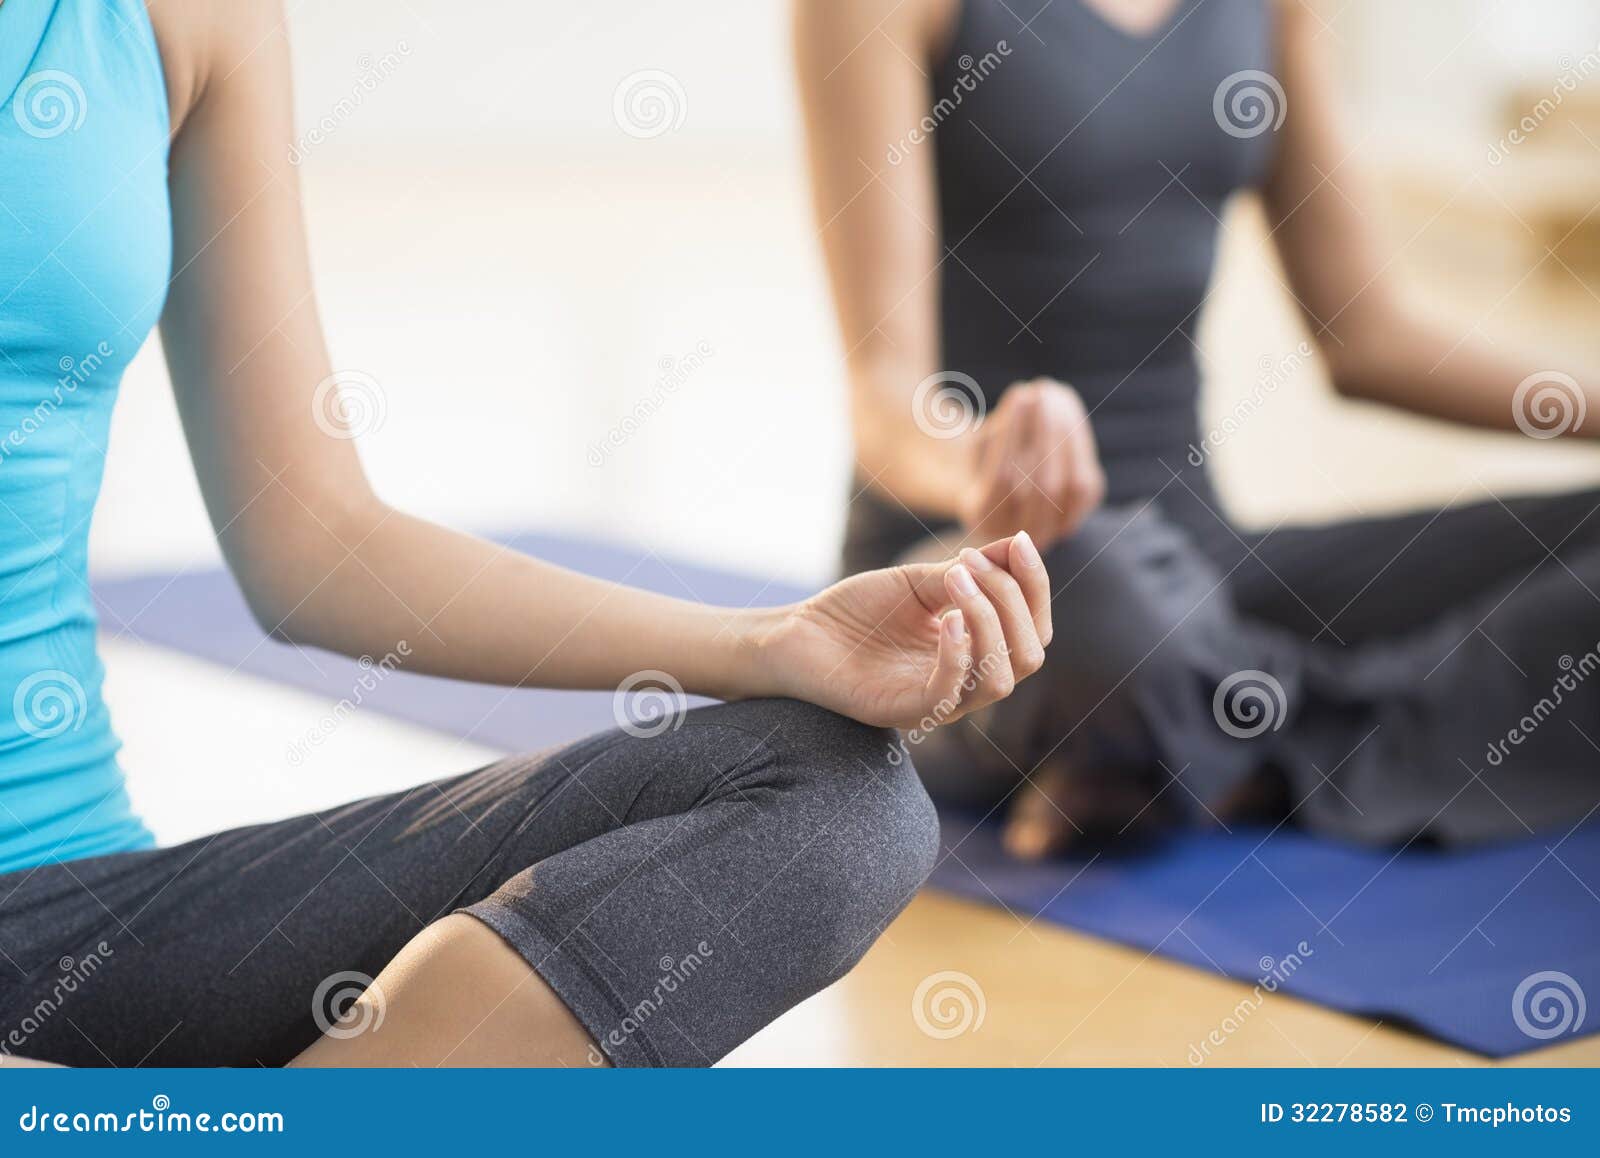 women practicing yoga at gym